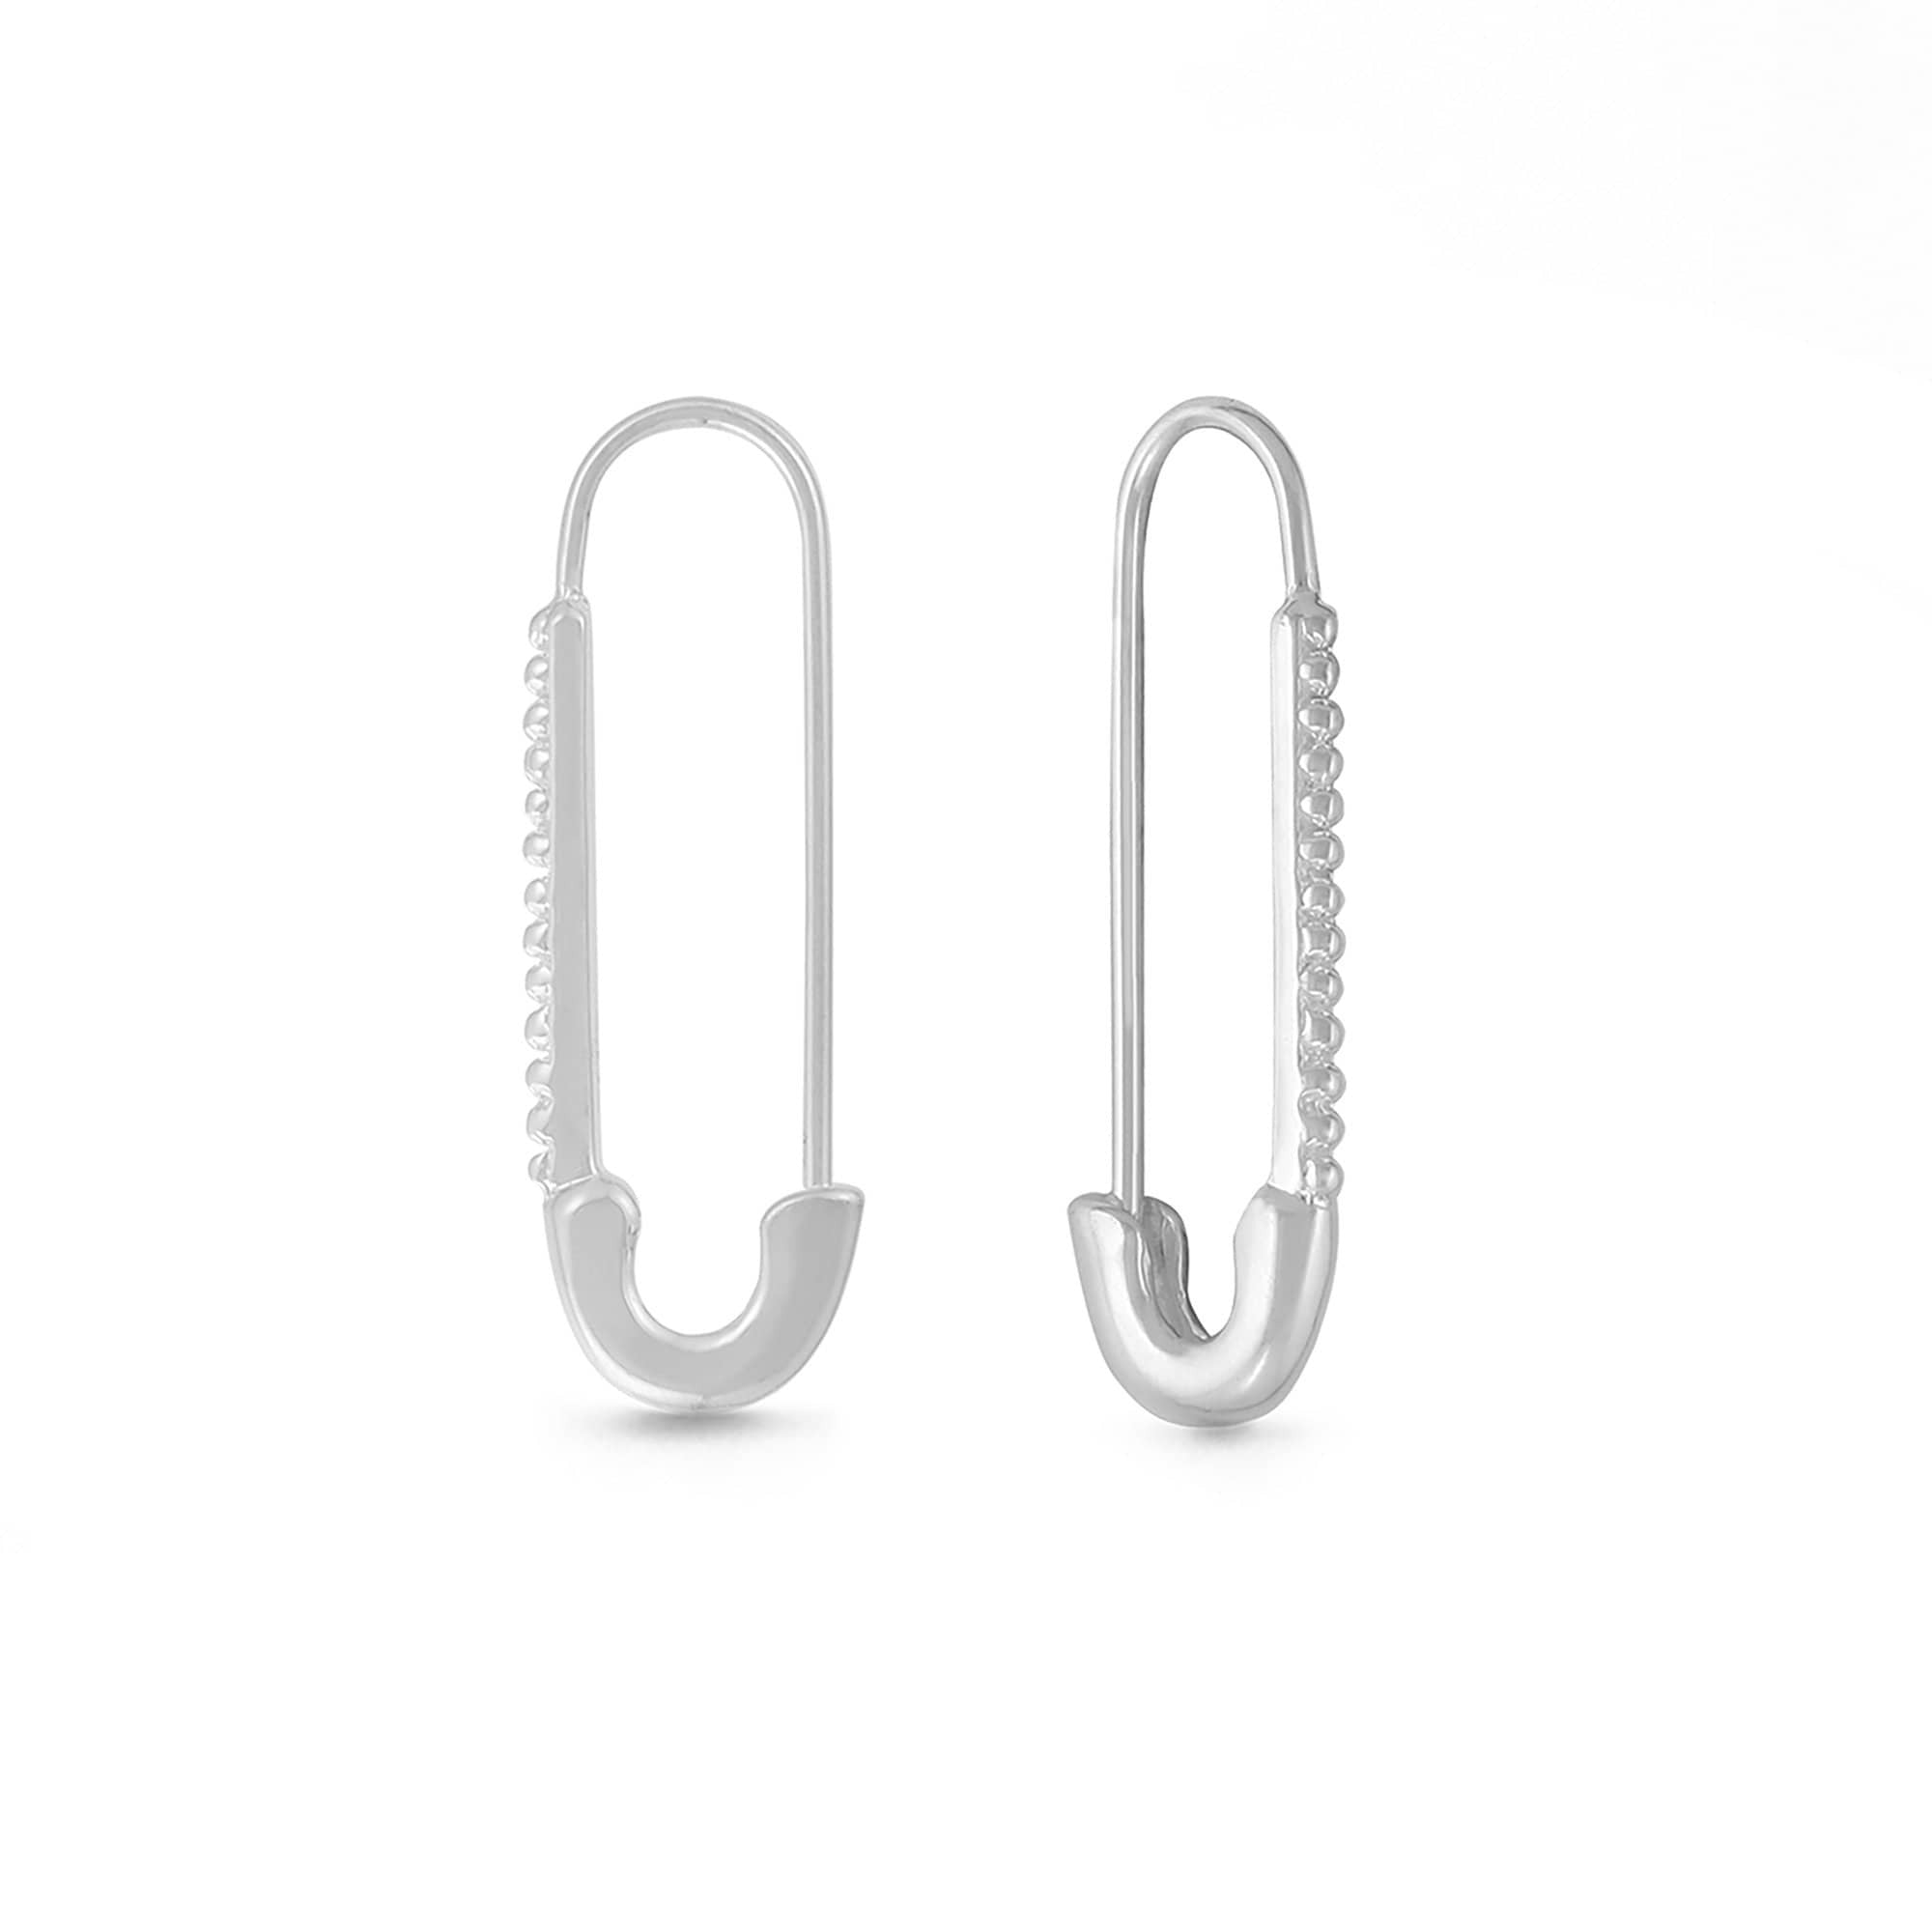 Boma Jewelry Earrings Sterling Silver Safety Pin Hoop Earrings